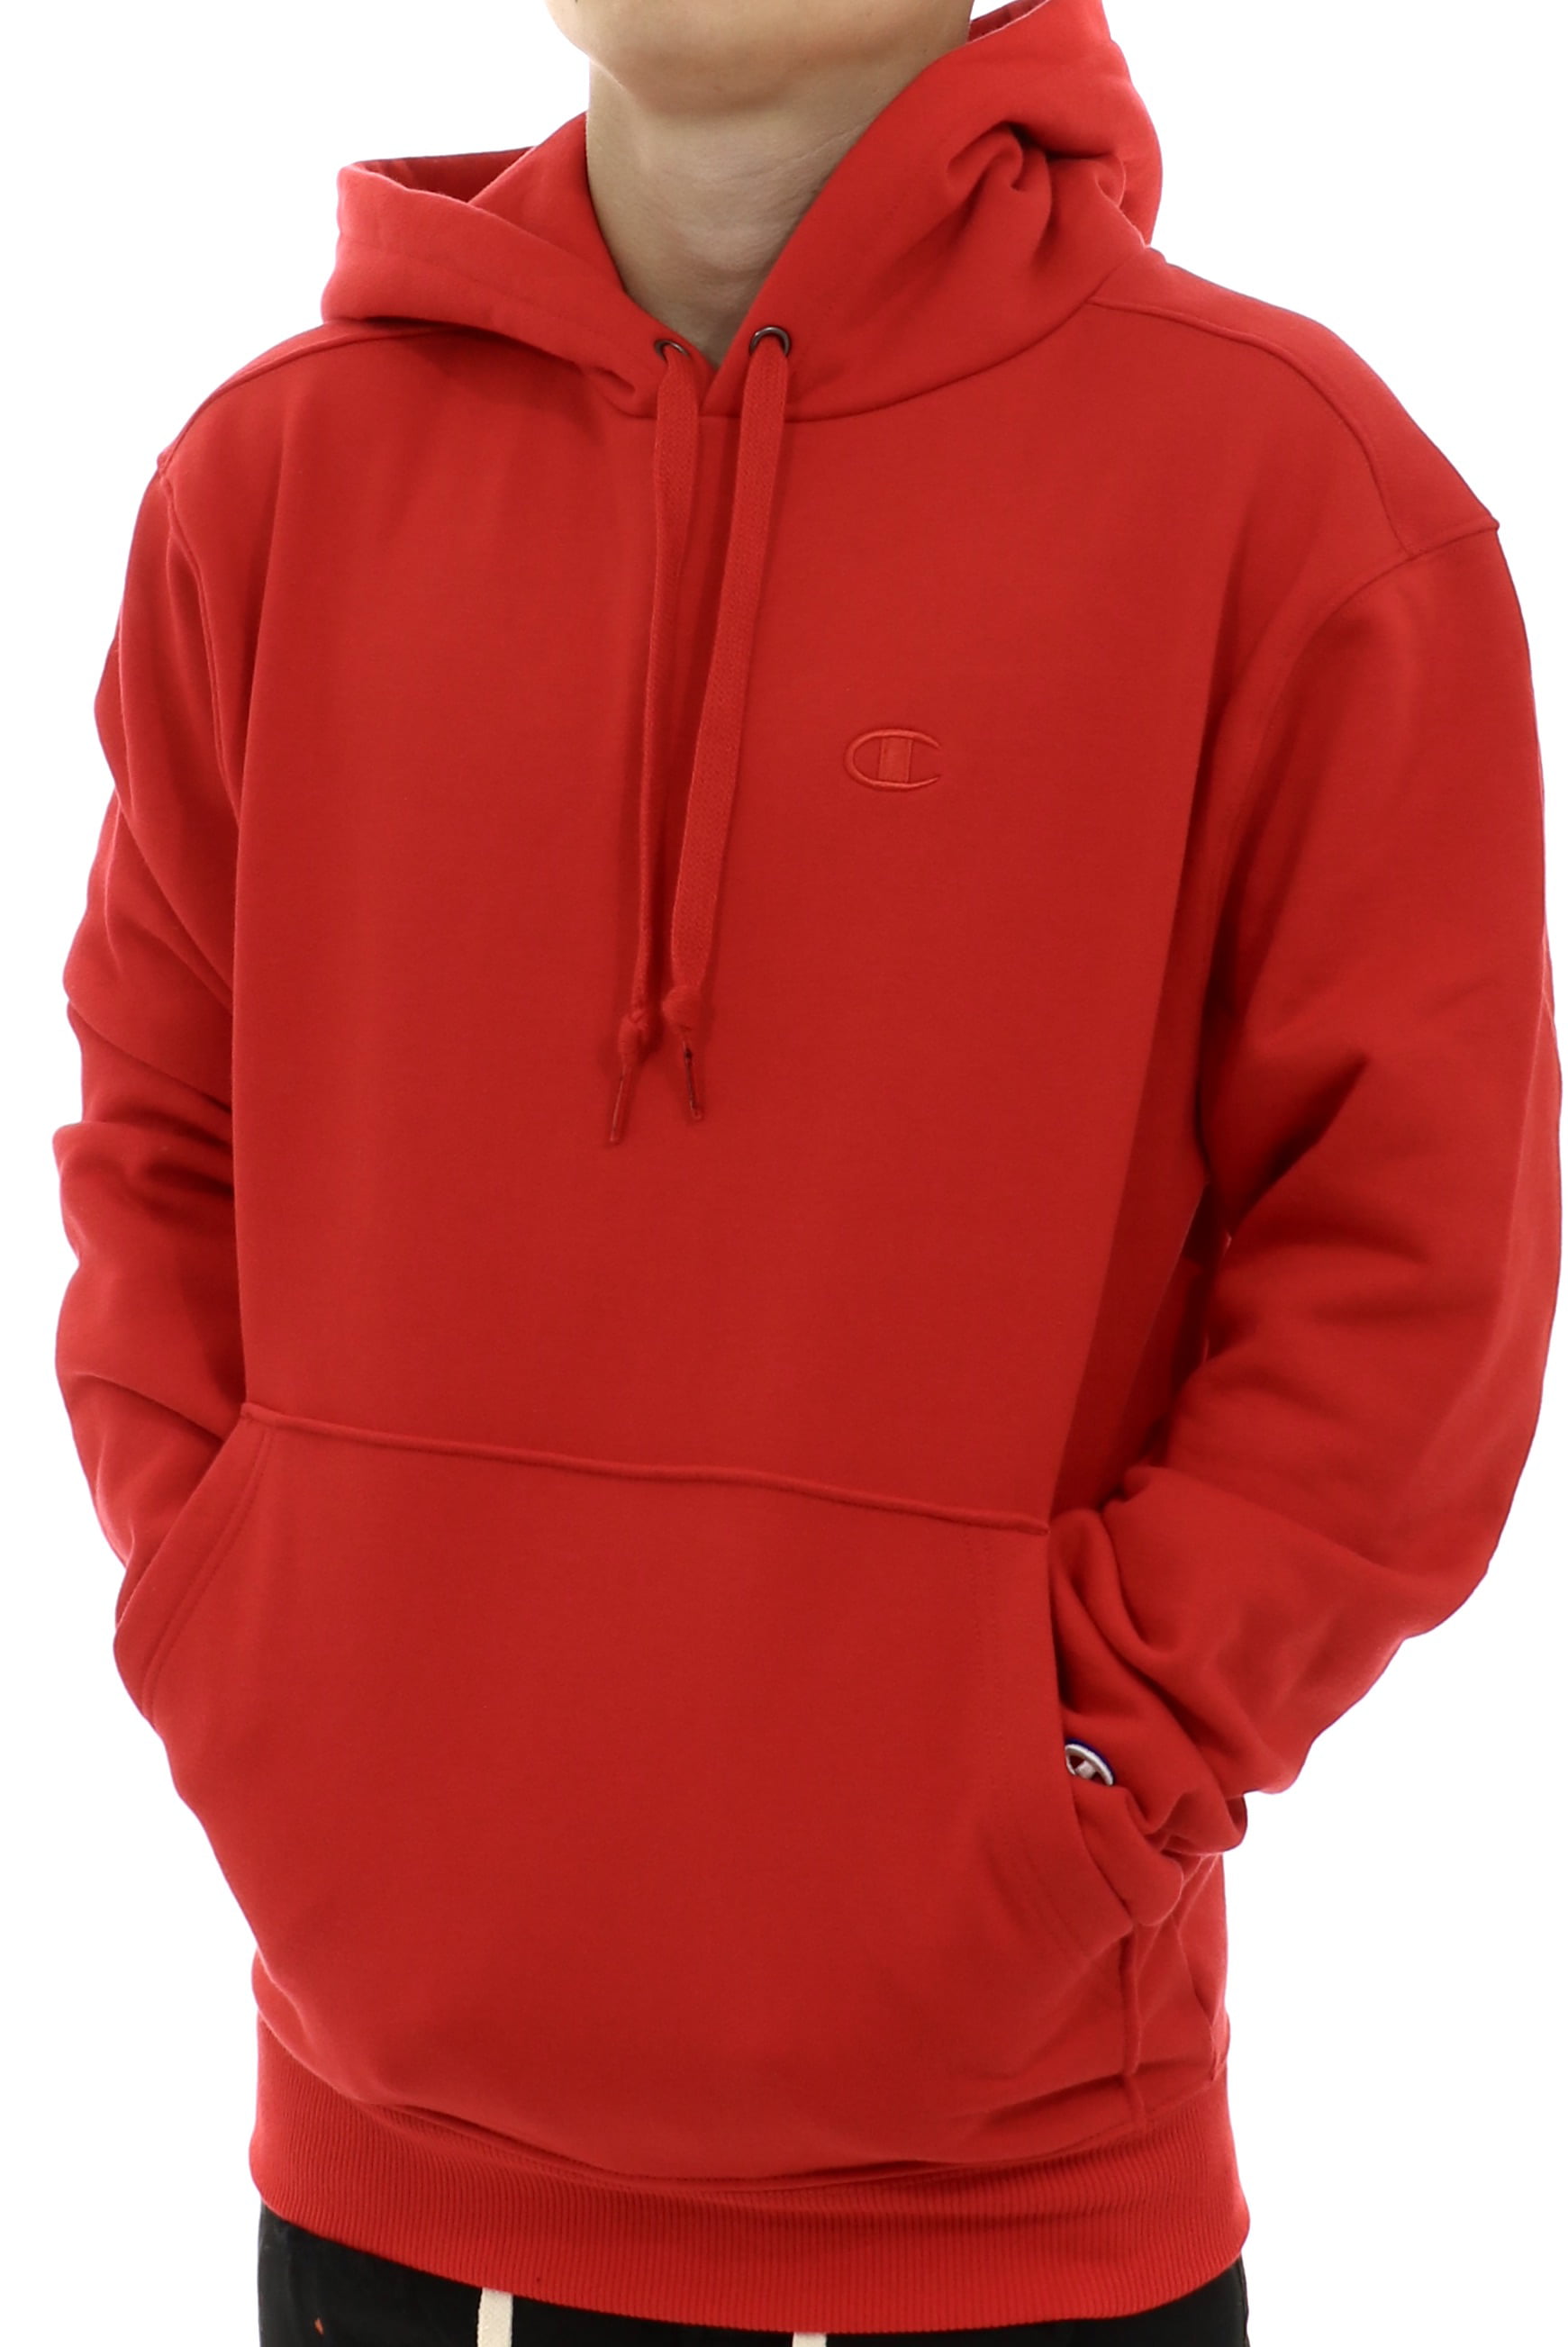 Champion Men�s Original Fleece Sweatshirt with Conehead Style Hood RED-2XL - Walmart.com